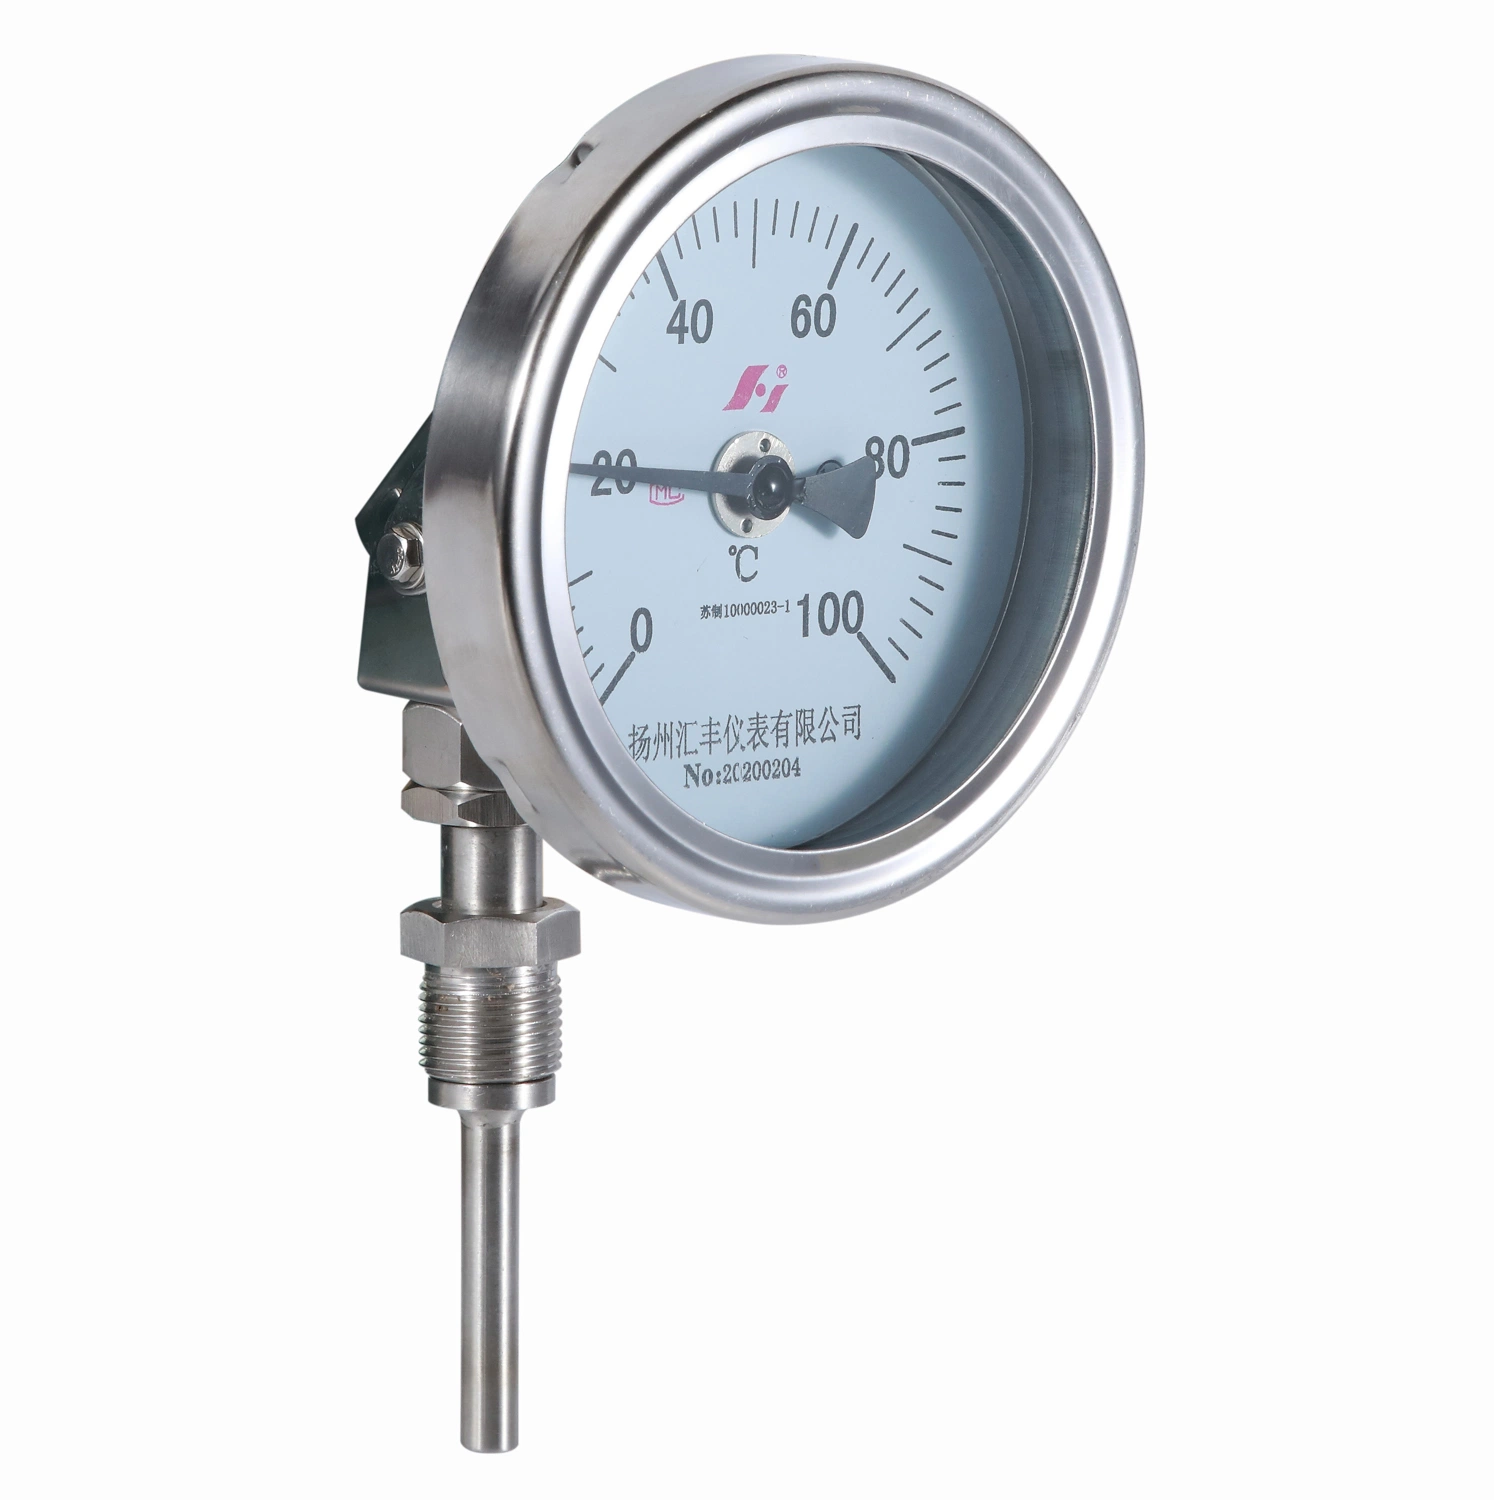 Temperature Gauge for Refrigerant Condenser, Heavy Duty Bimetal Thermometer